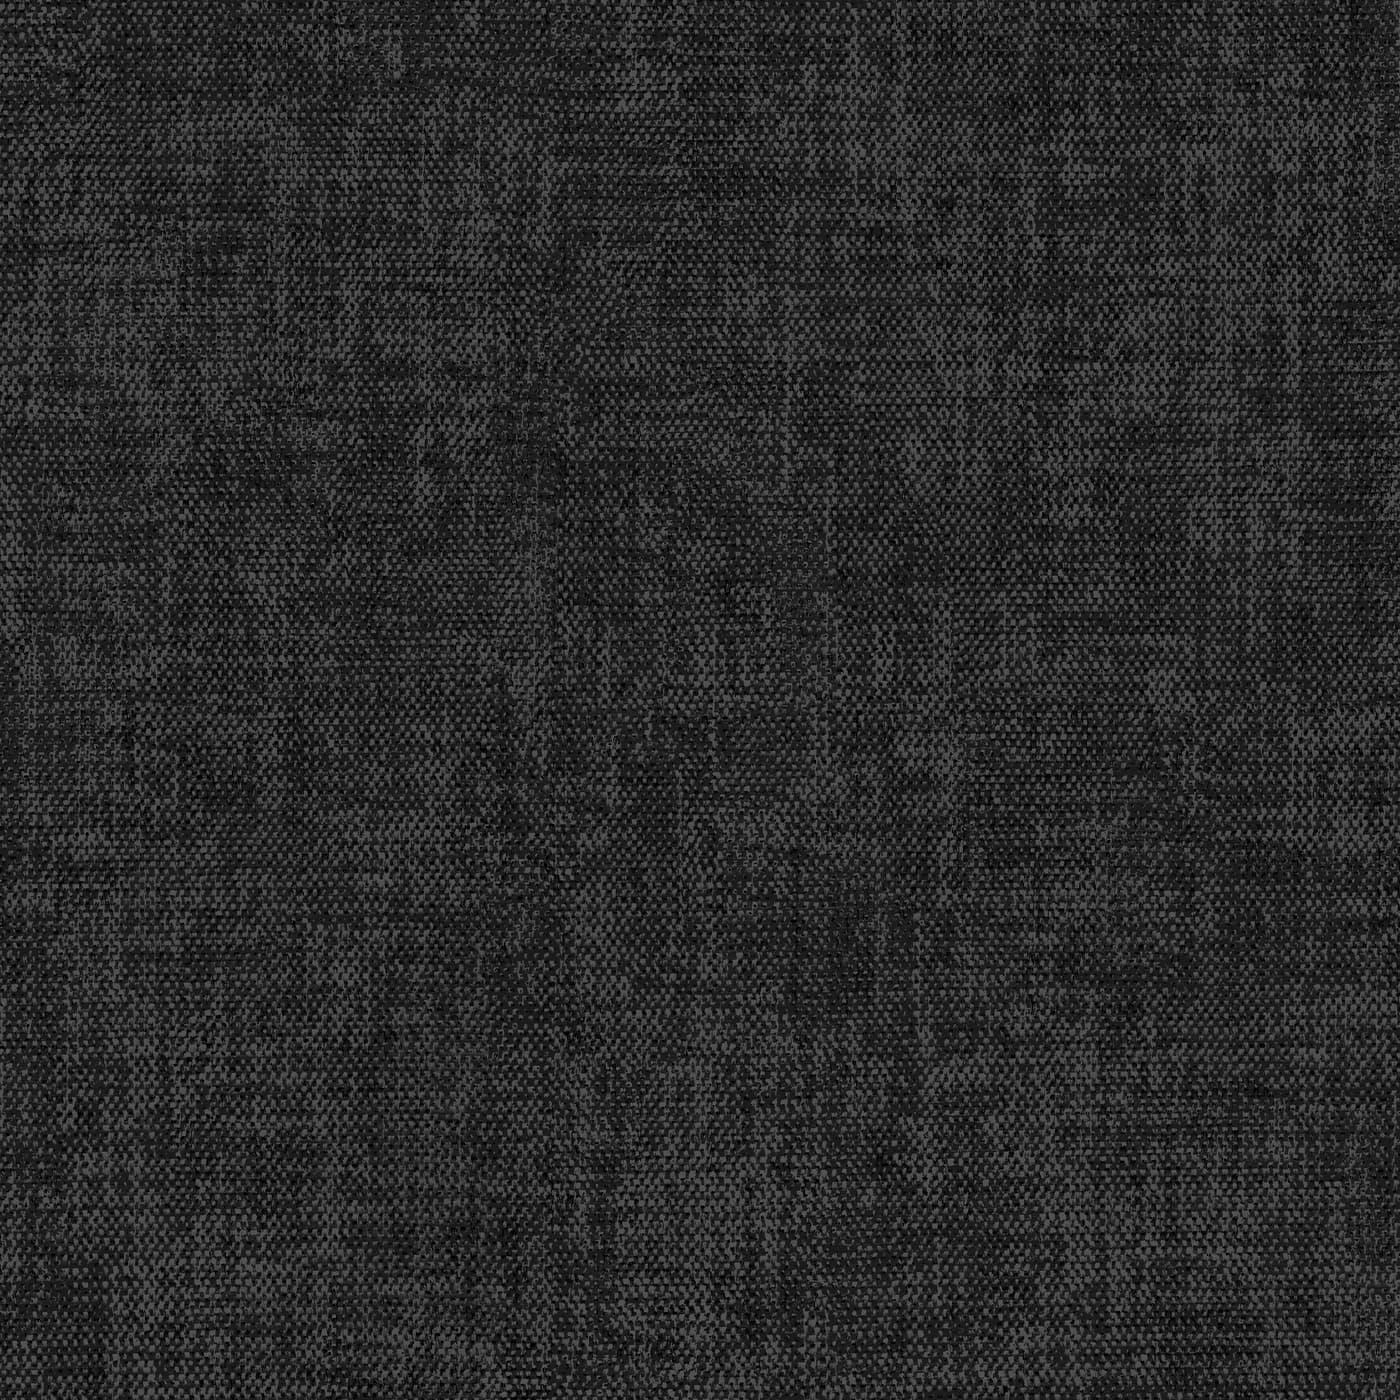 Zara Charcoal Wallpaper 122416 by Superfresco Easy